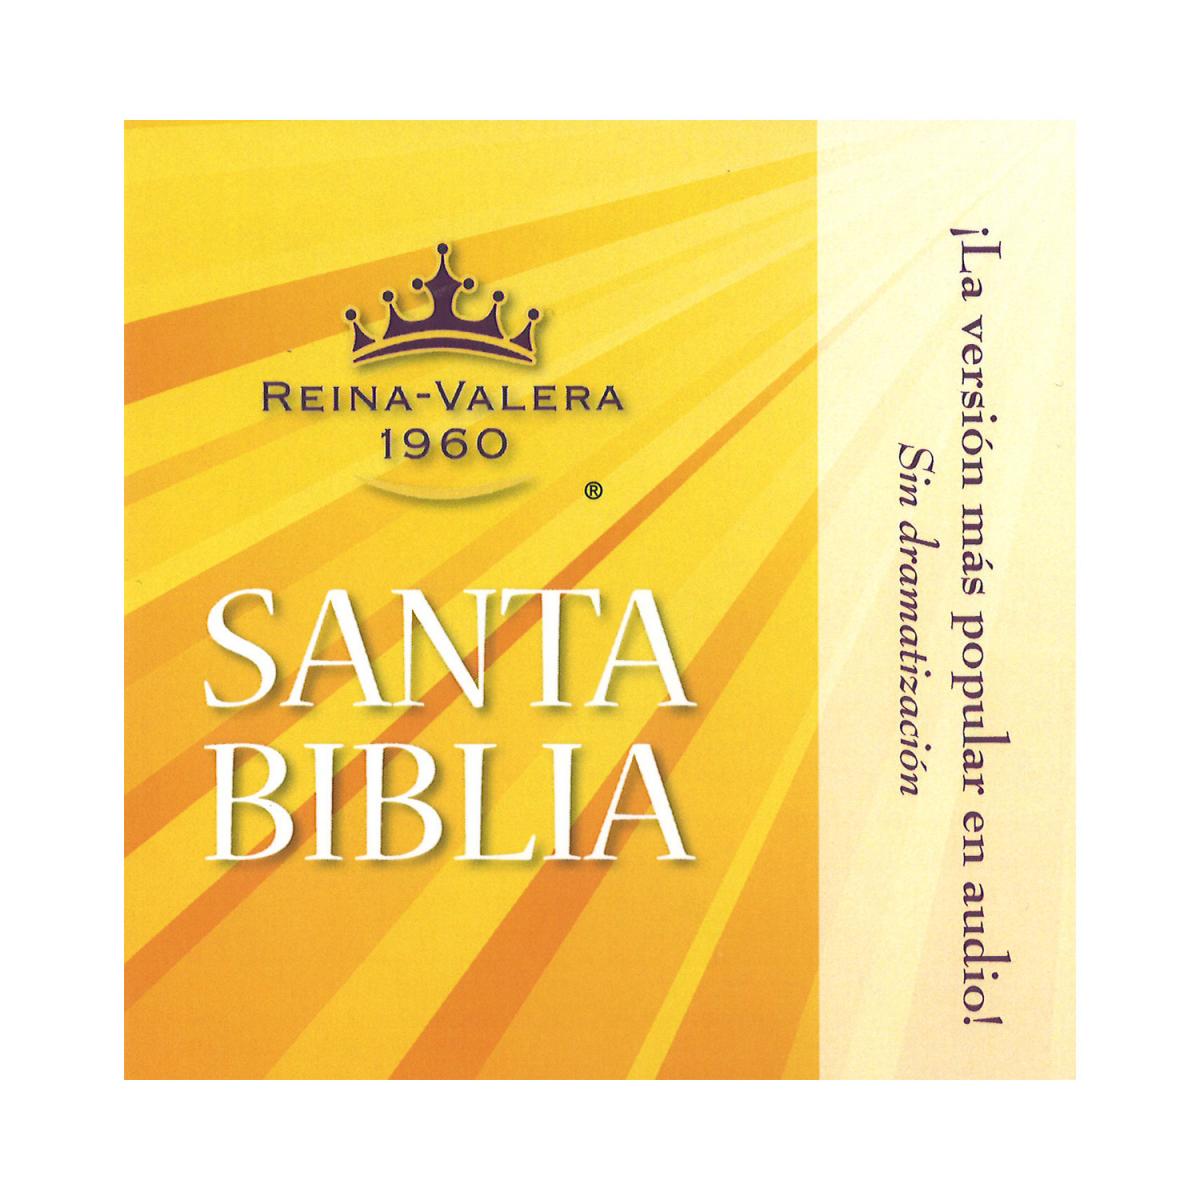 RVR60 Biblia en audio MP3 no dramatizada